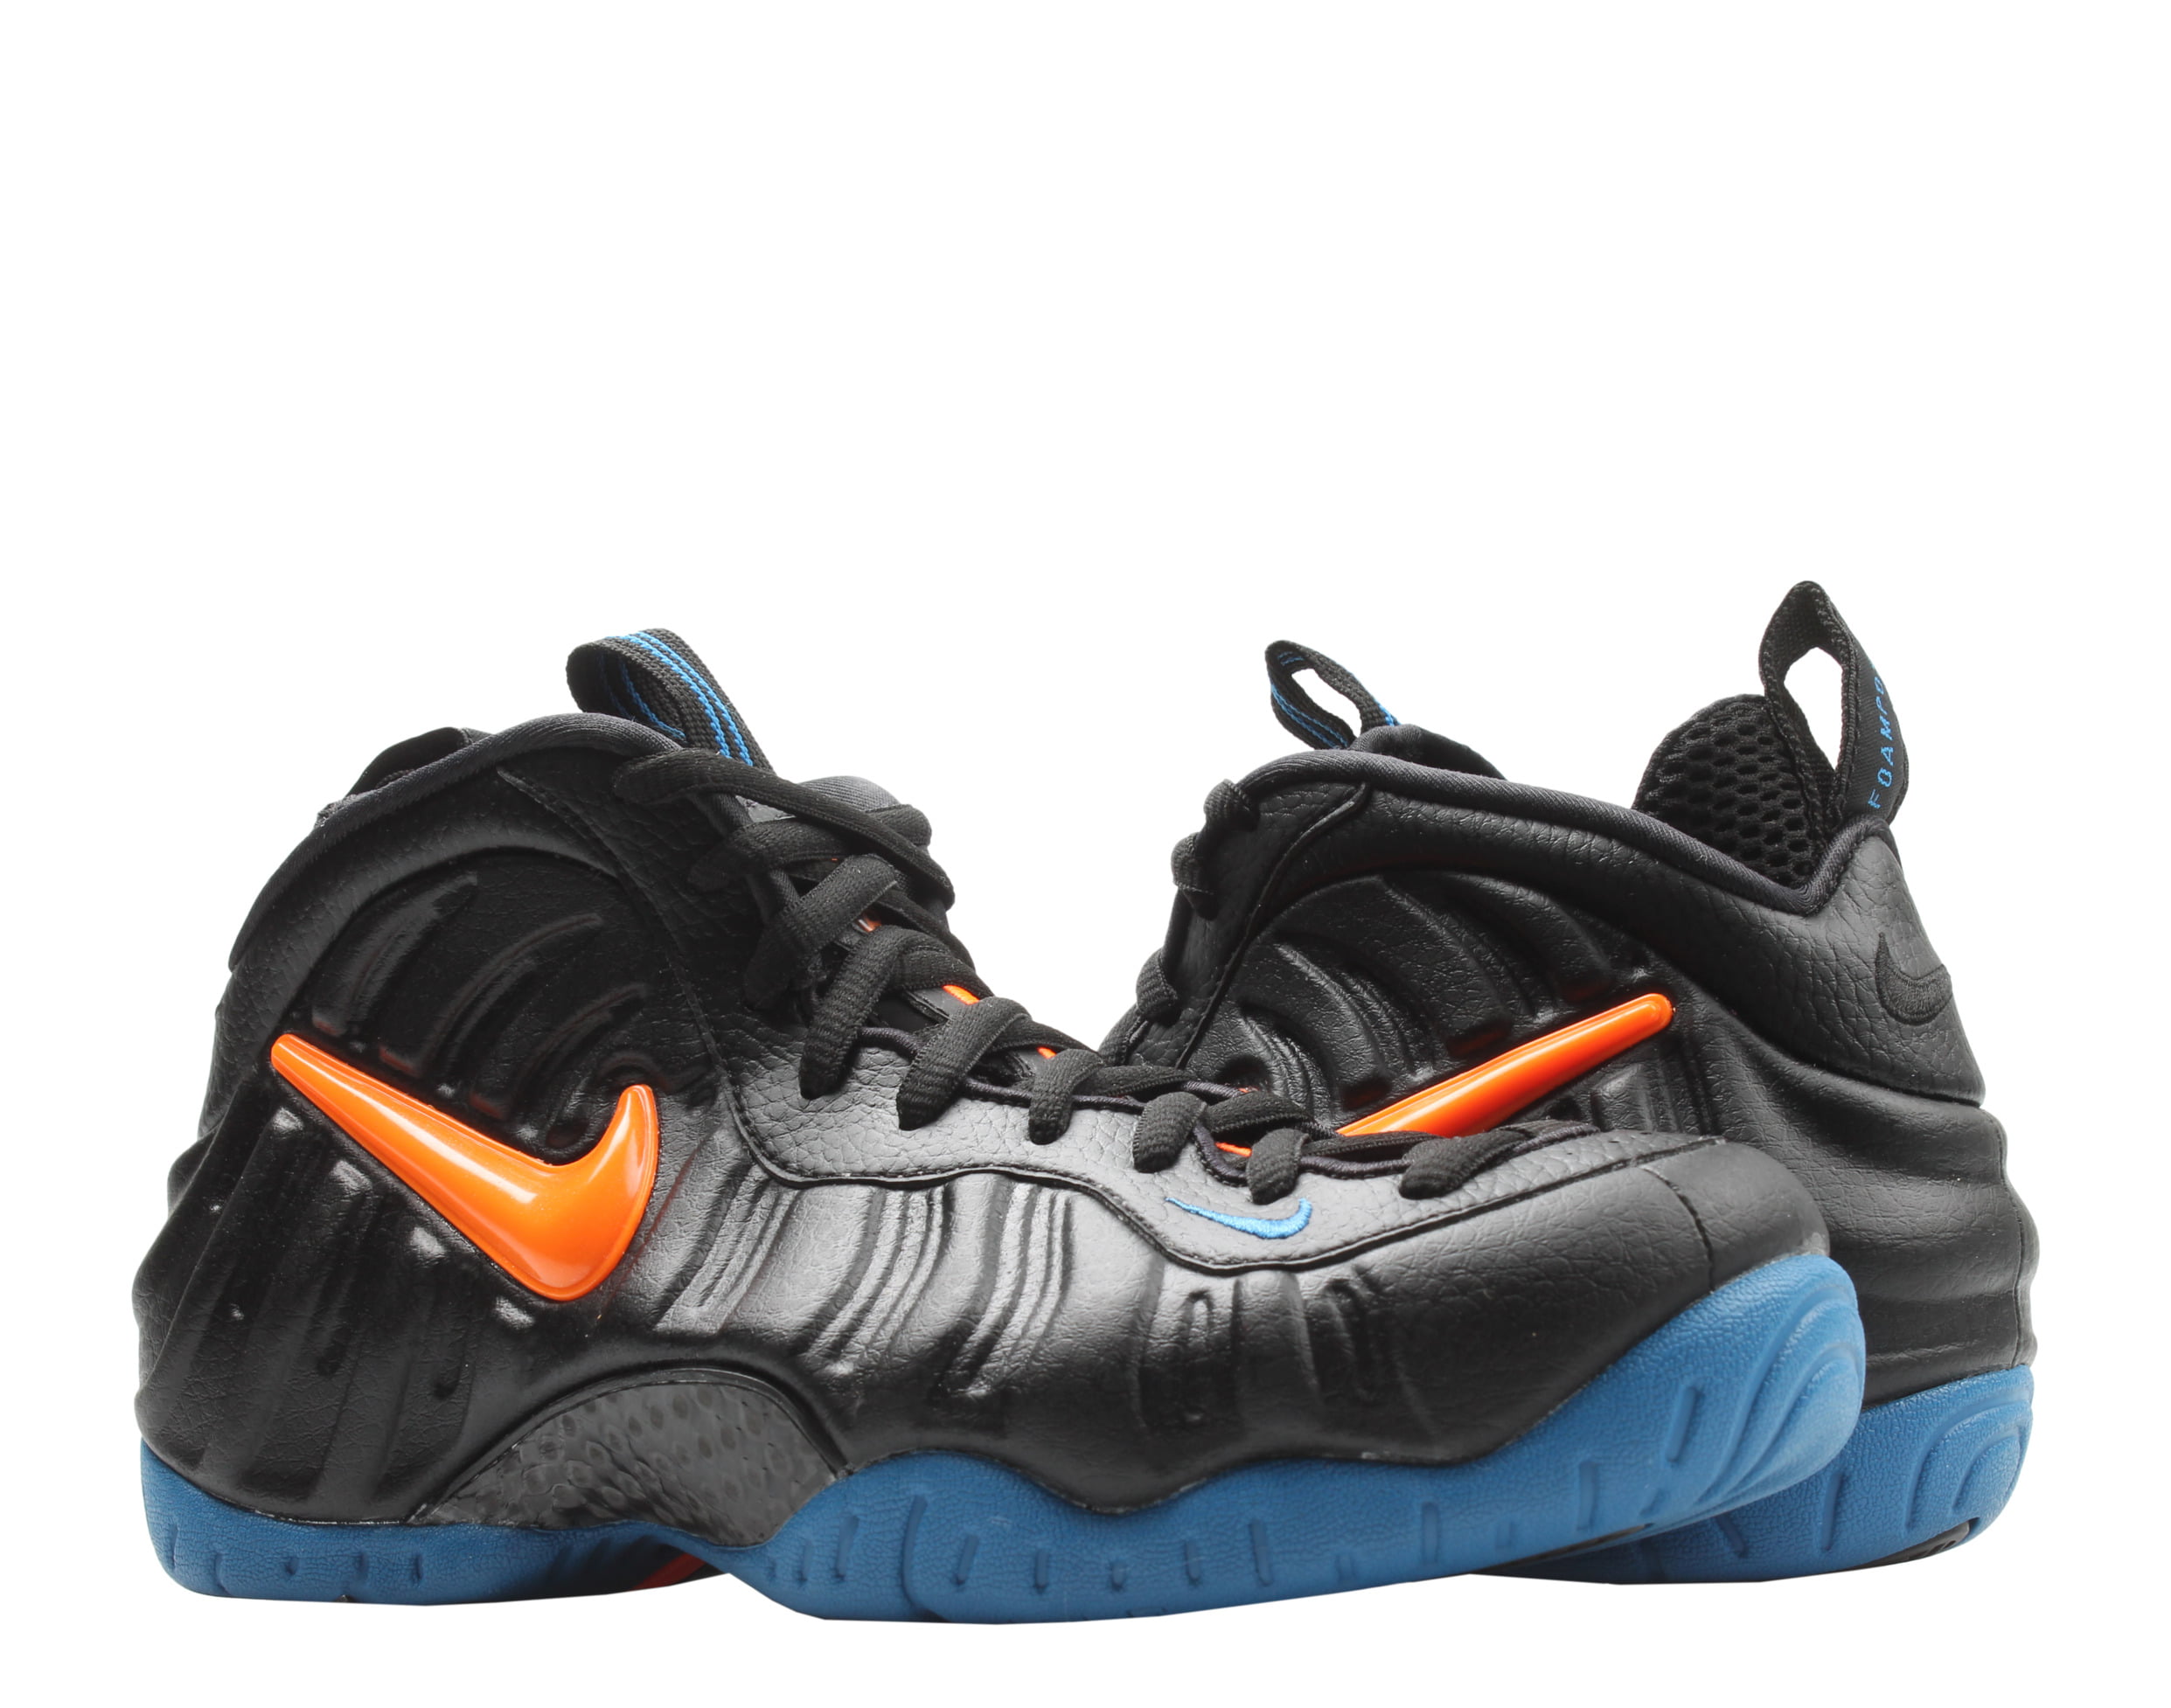 Nike Air Foamposite Pro Knicks Black/Orange Men's Basketball Shoes  624041-010 